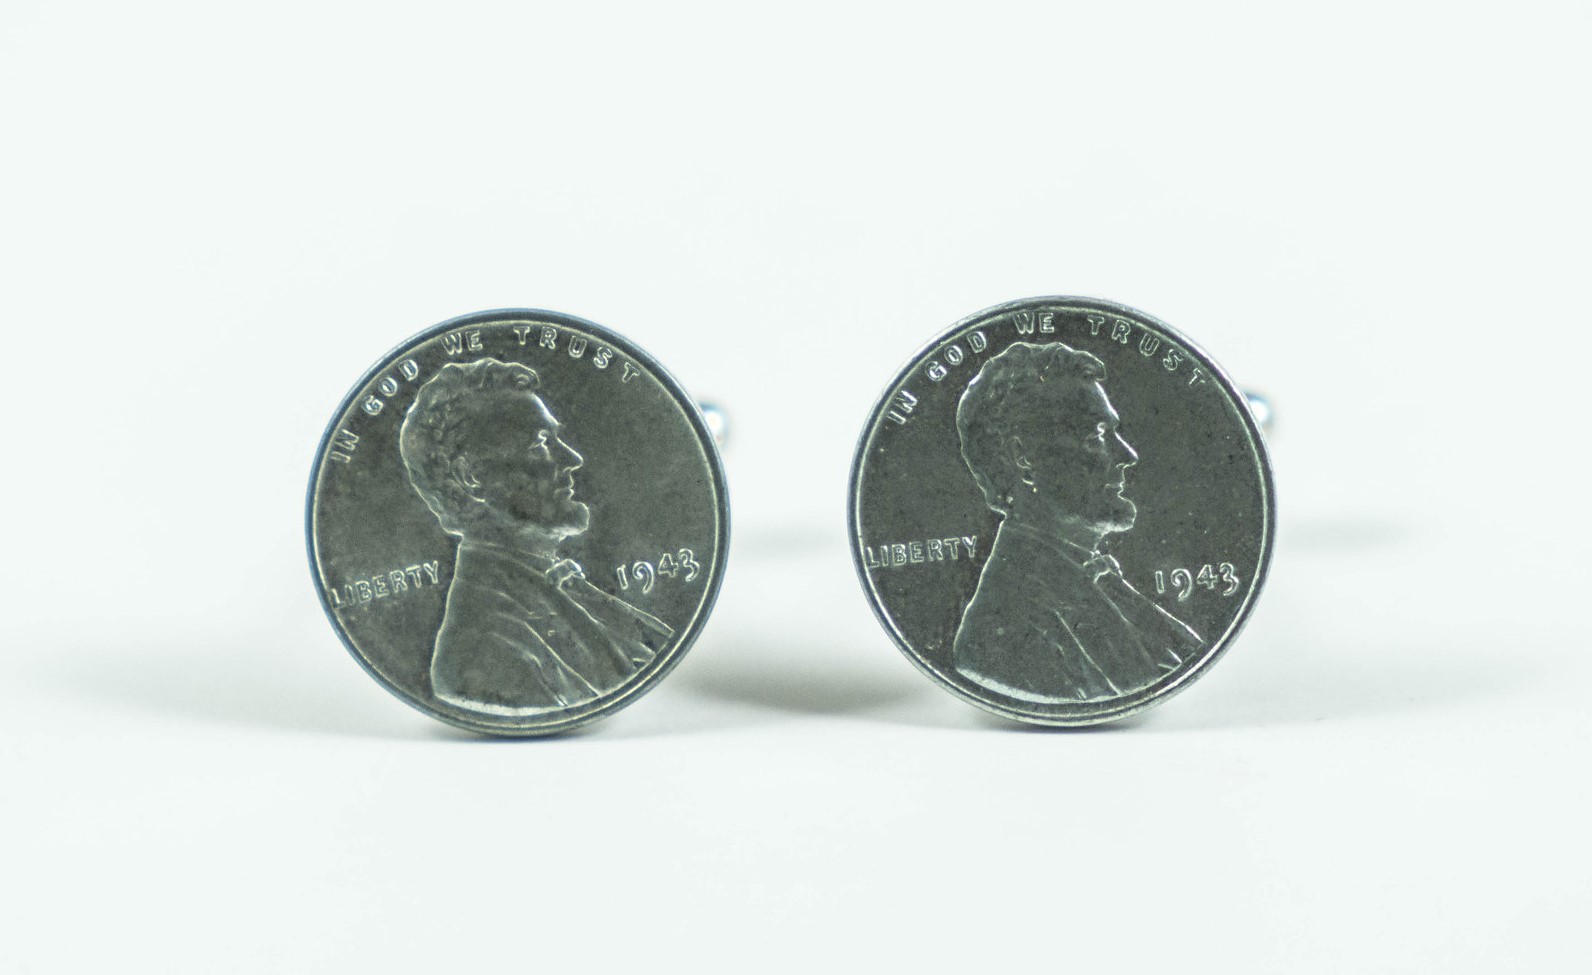 New Cufflinks Vintage 75 Year Old World War II Steel Penny 1 Cent Coin Money B01 